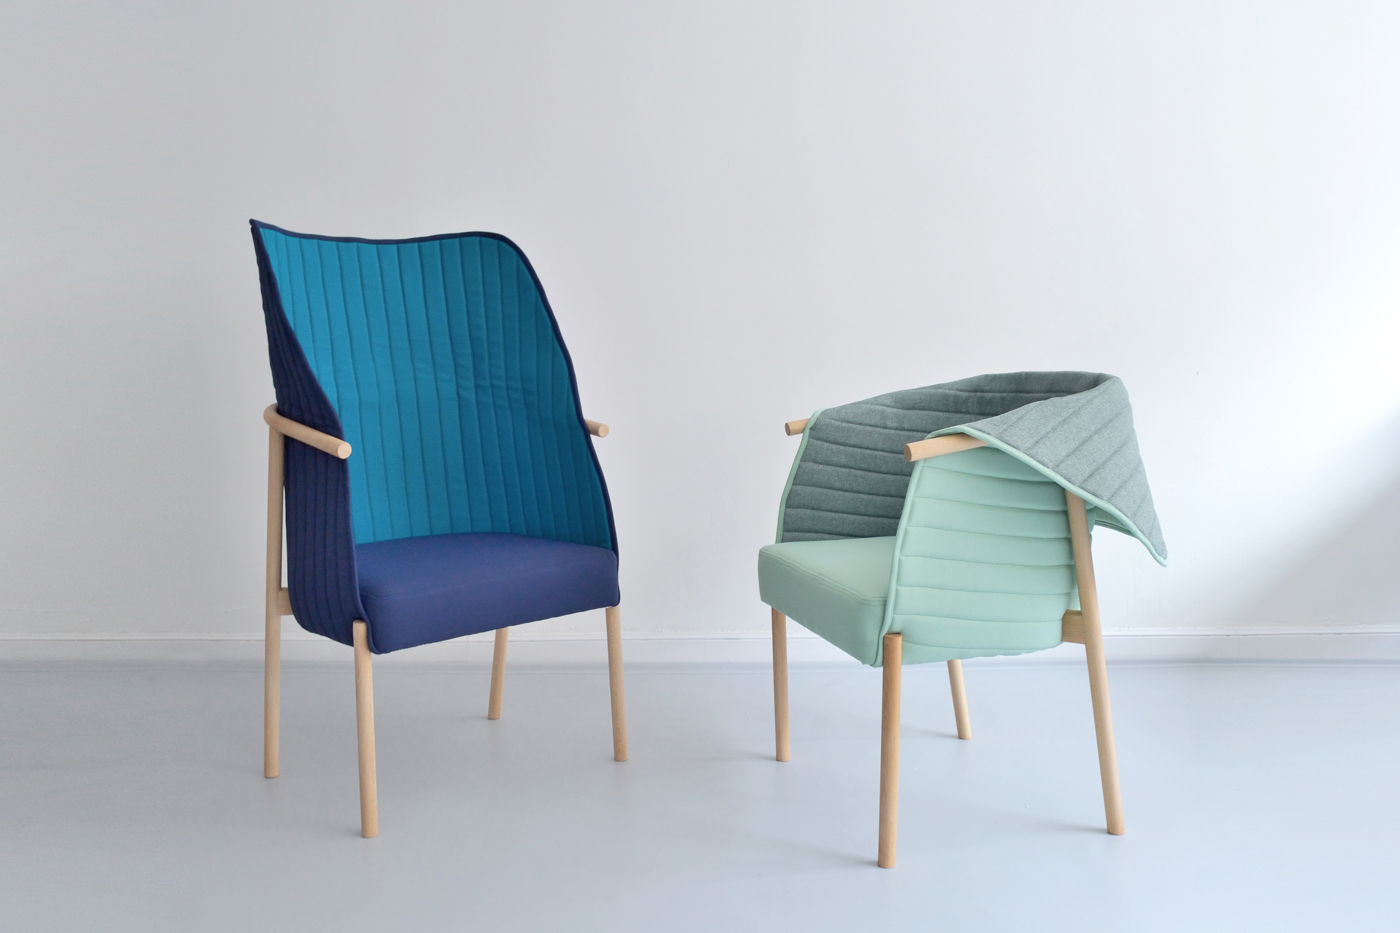 chair upholstered furniture wood natural wood Beech HAYA madera silla bitone mint emerald menta reddot